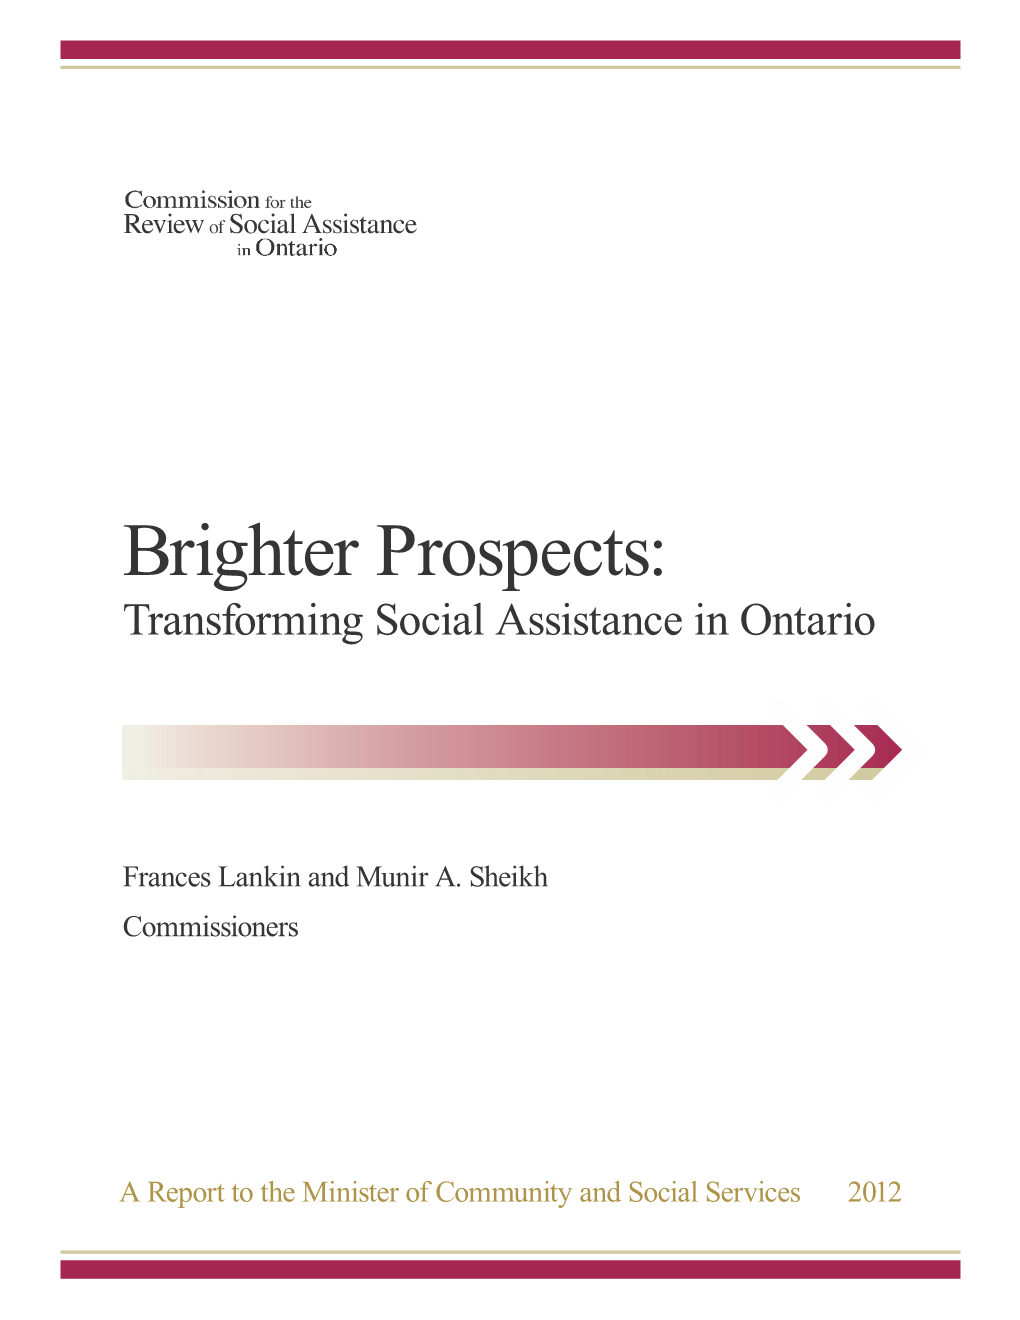 Transforming Social Assistance in Ontario